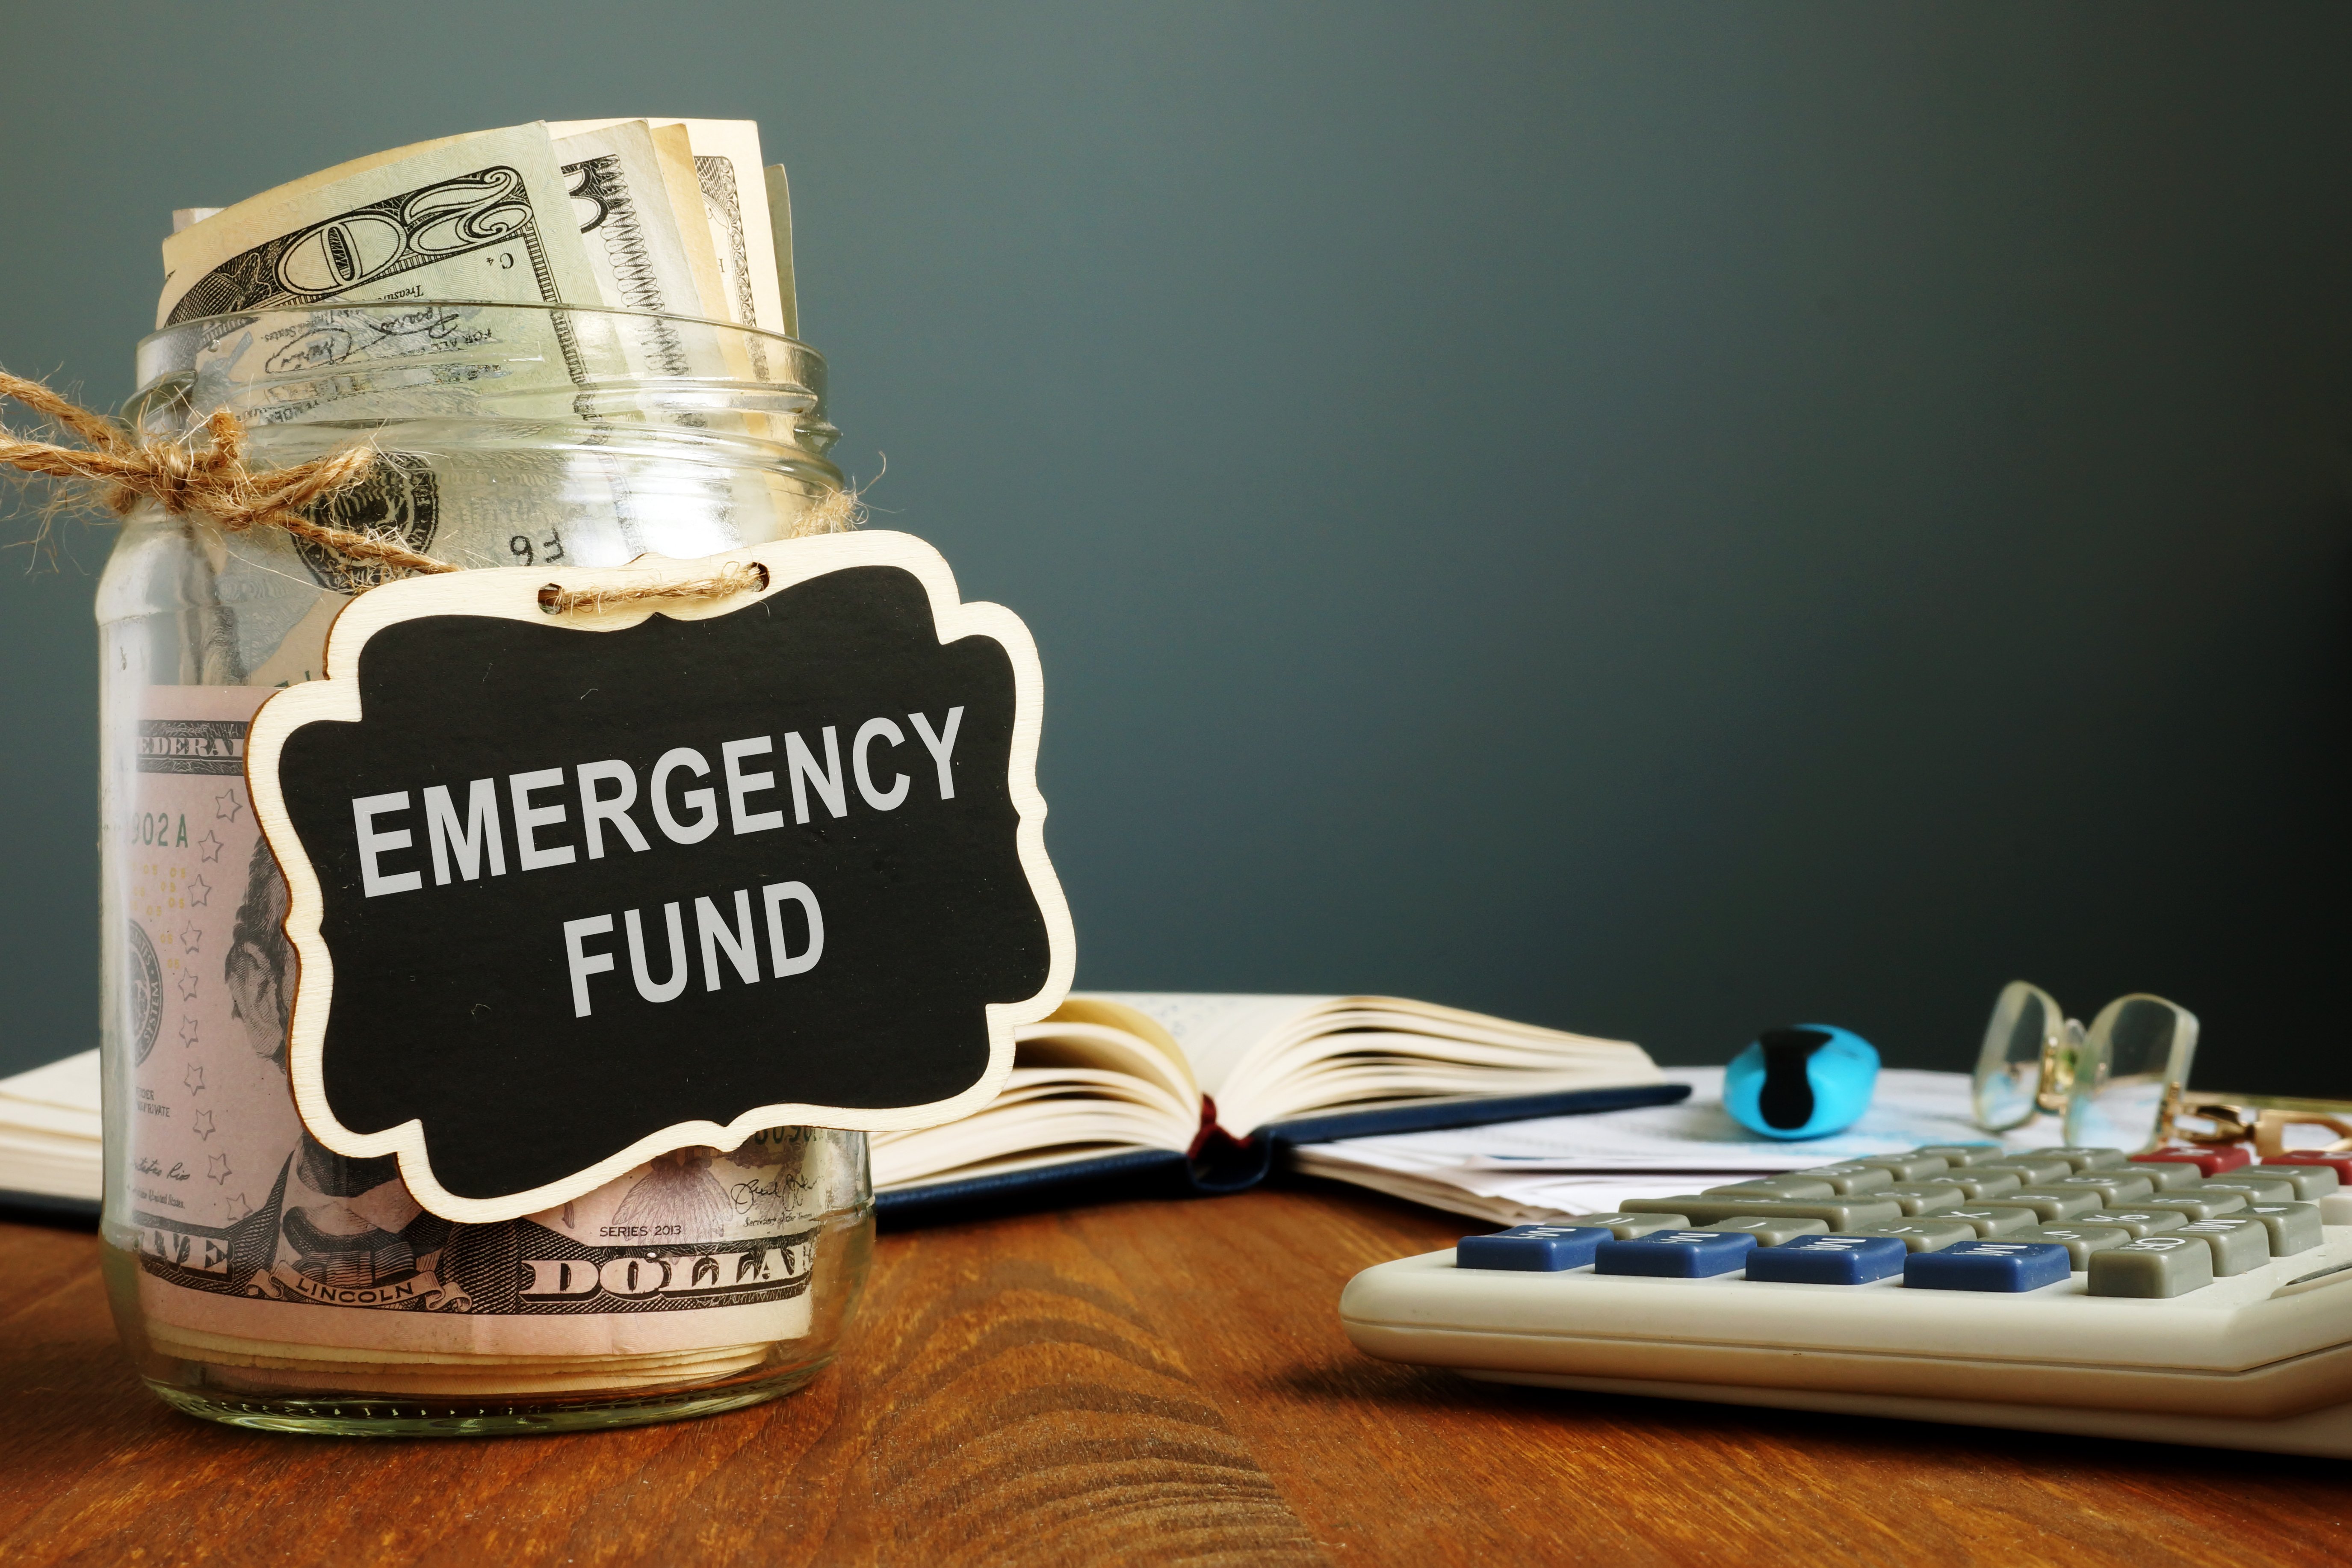 Mason Jar with Emergency Fund Money Inside